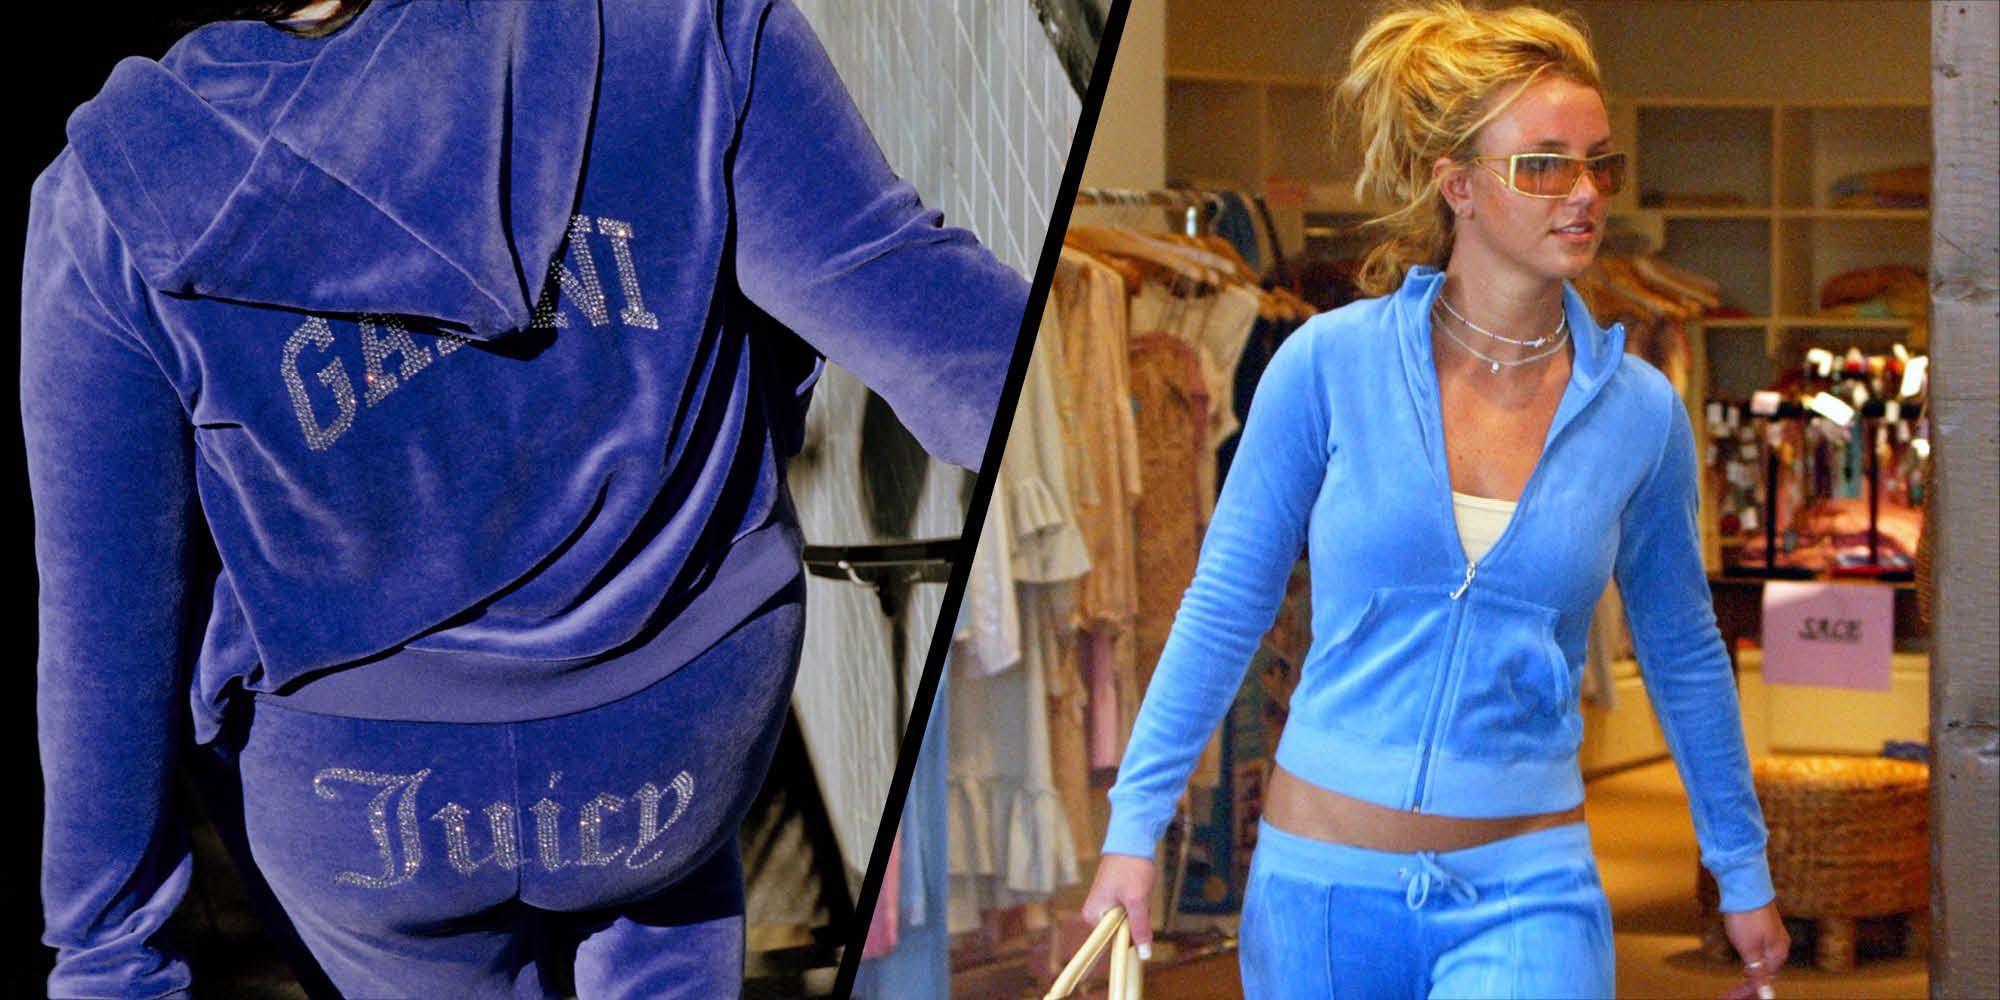 Paris Hilton and Kim kardashian  2000s fashion trends, Juicy